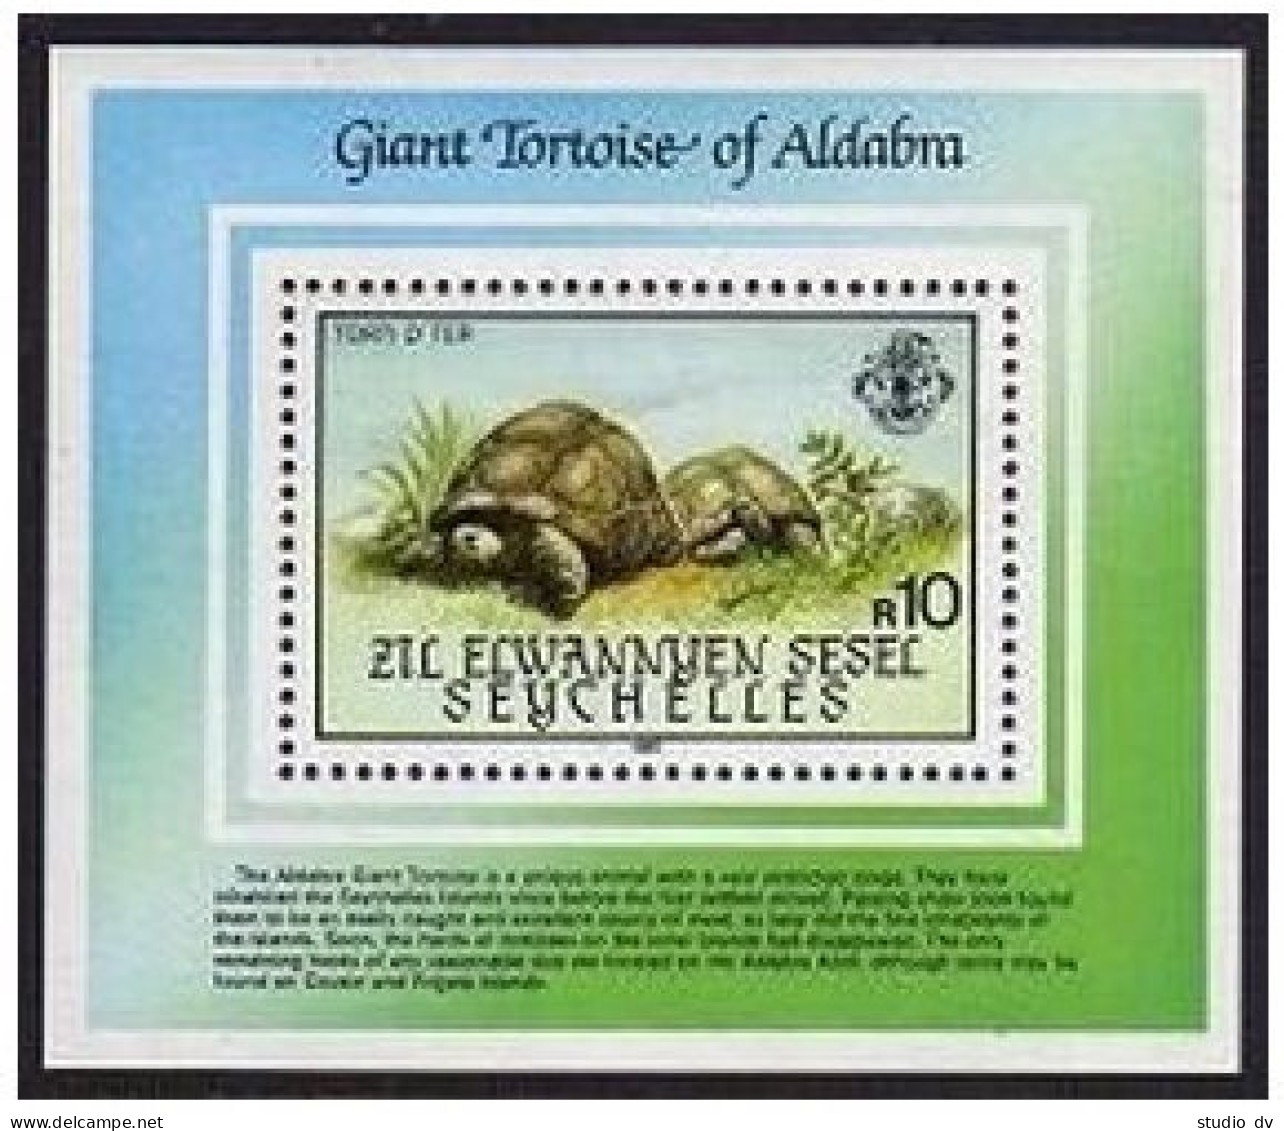 Zil Elwannyen Sesel 106-110, MNH. Mi 104-107, Bl.4. WWF-1985. Giant Tortoise. - Seychelles (1976-...)